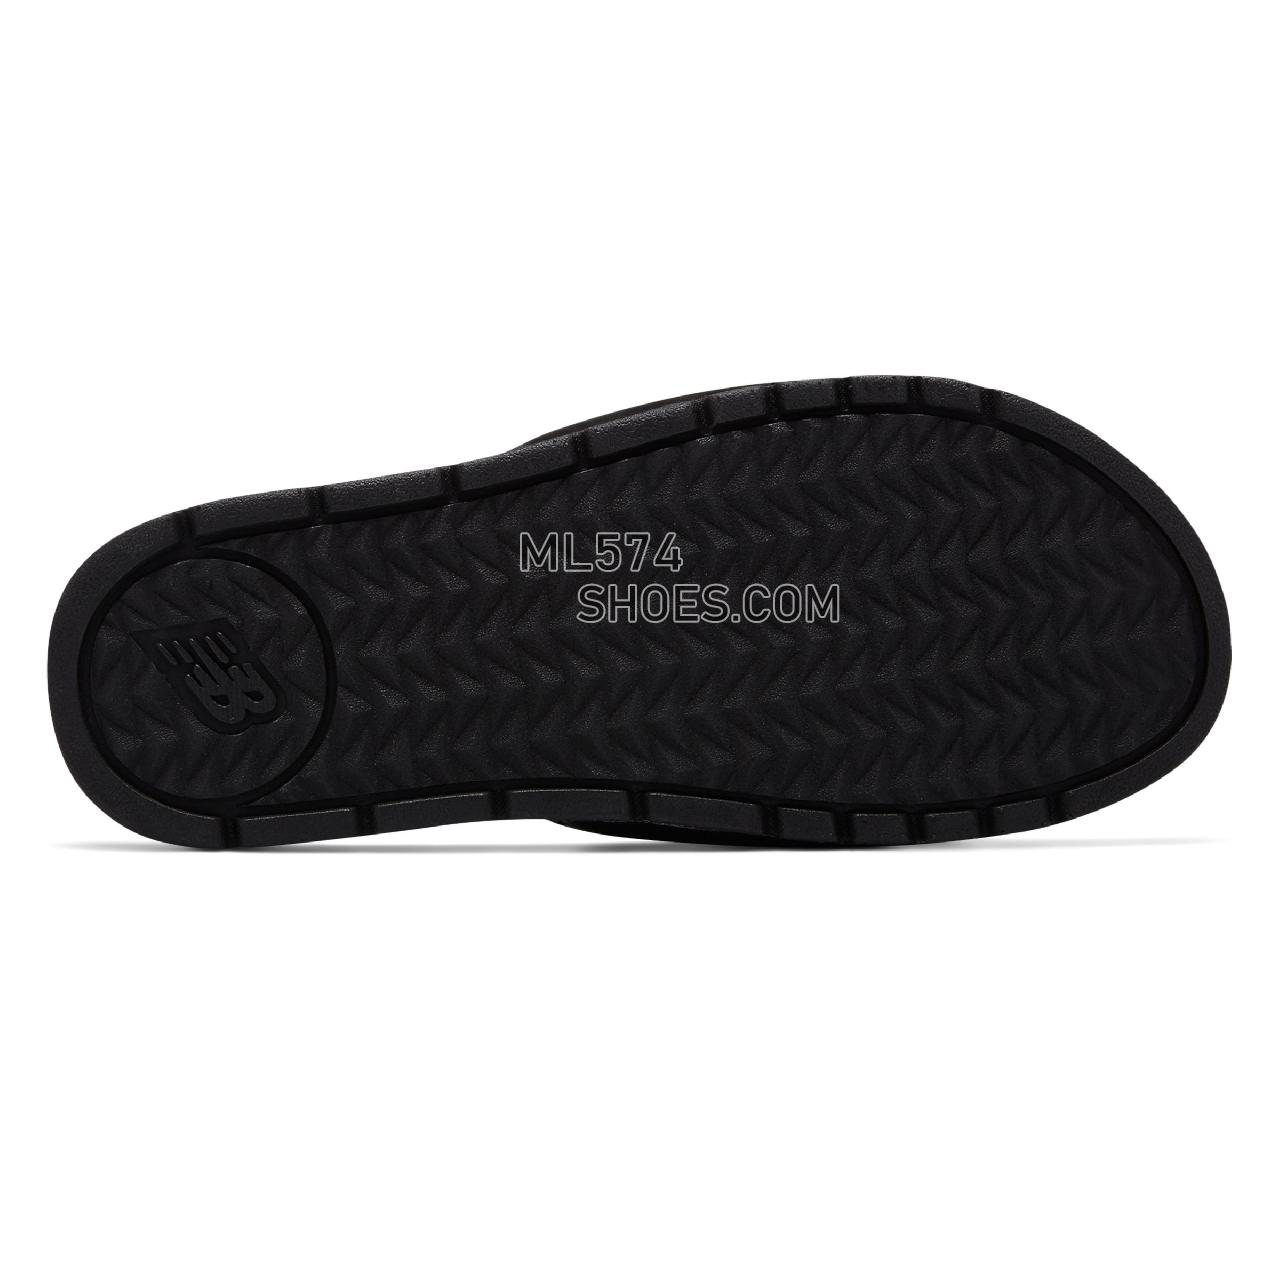 New Balance Cush+ Slide - Men's 3064 - Sandals Black with Hi-Lite - M3064BKG